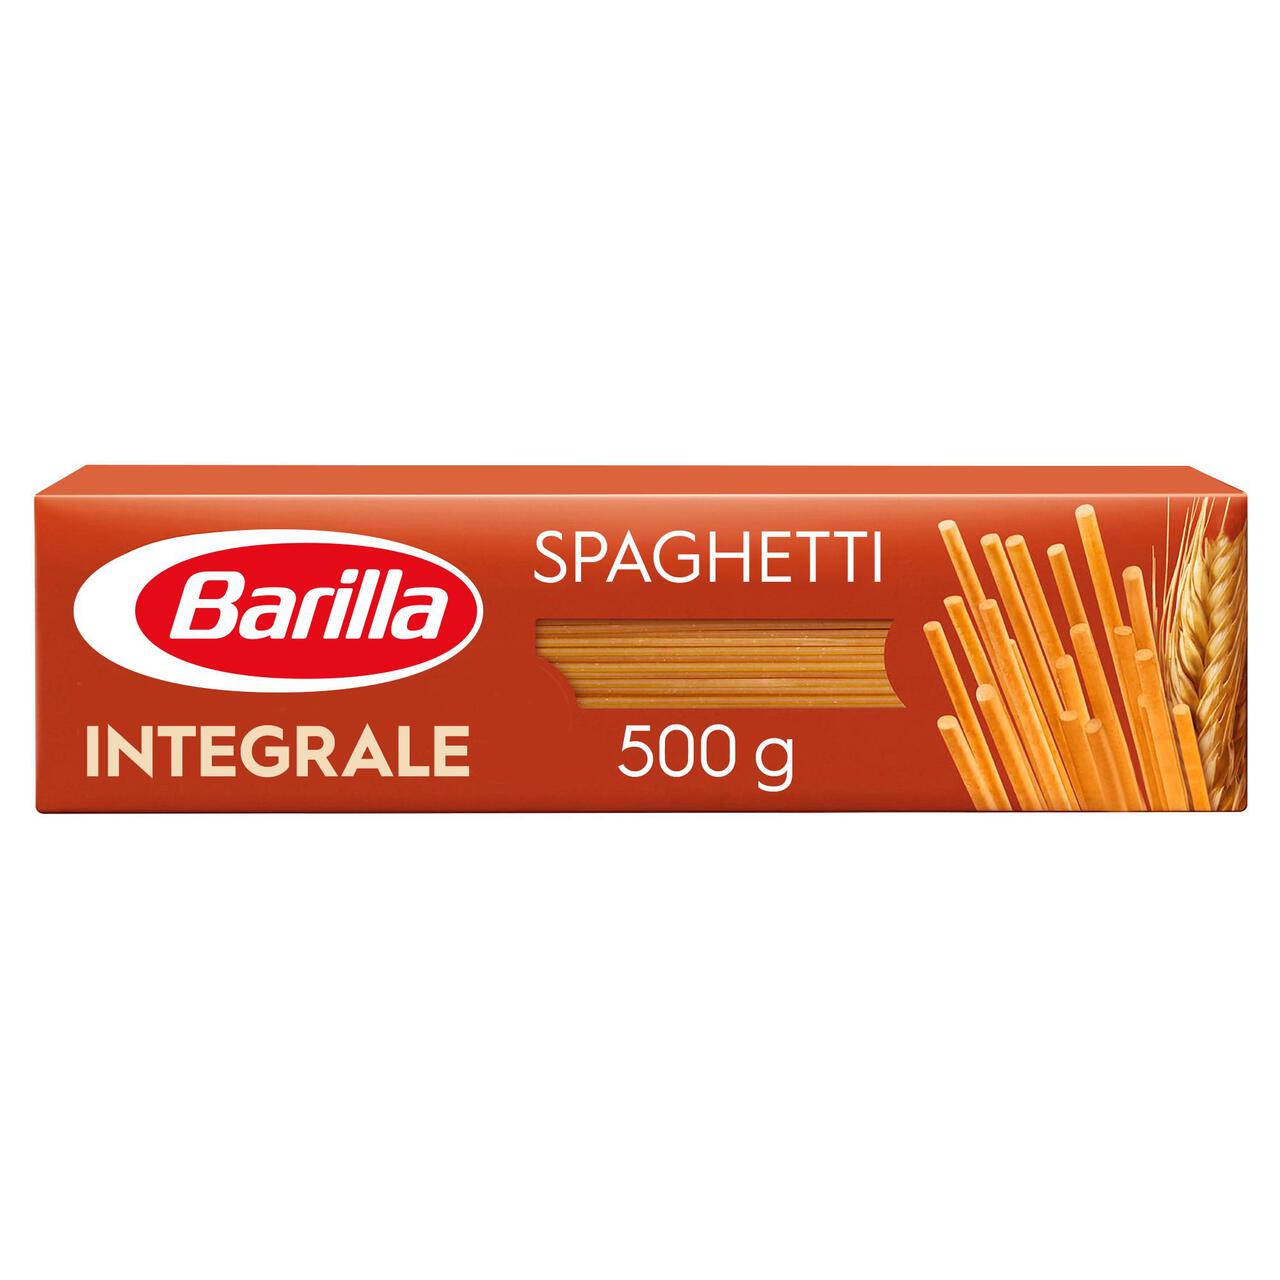 Barilla Whole Wheat Pasta Spaghetti Wholegrain Pasta 500g